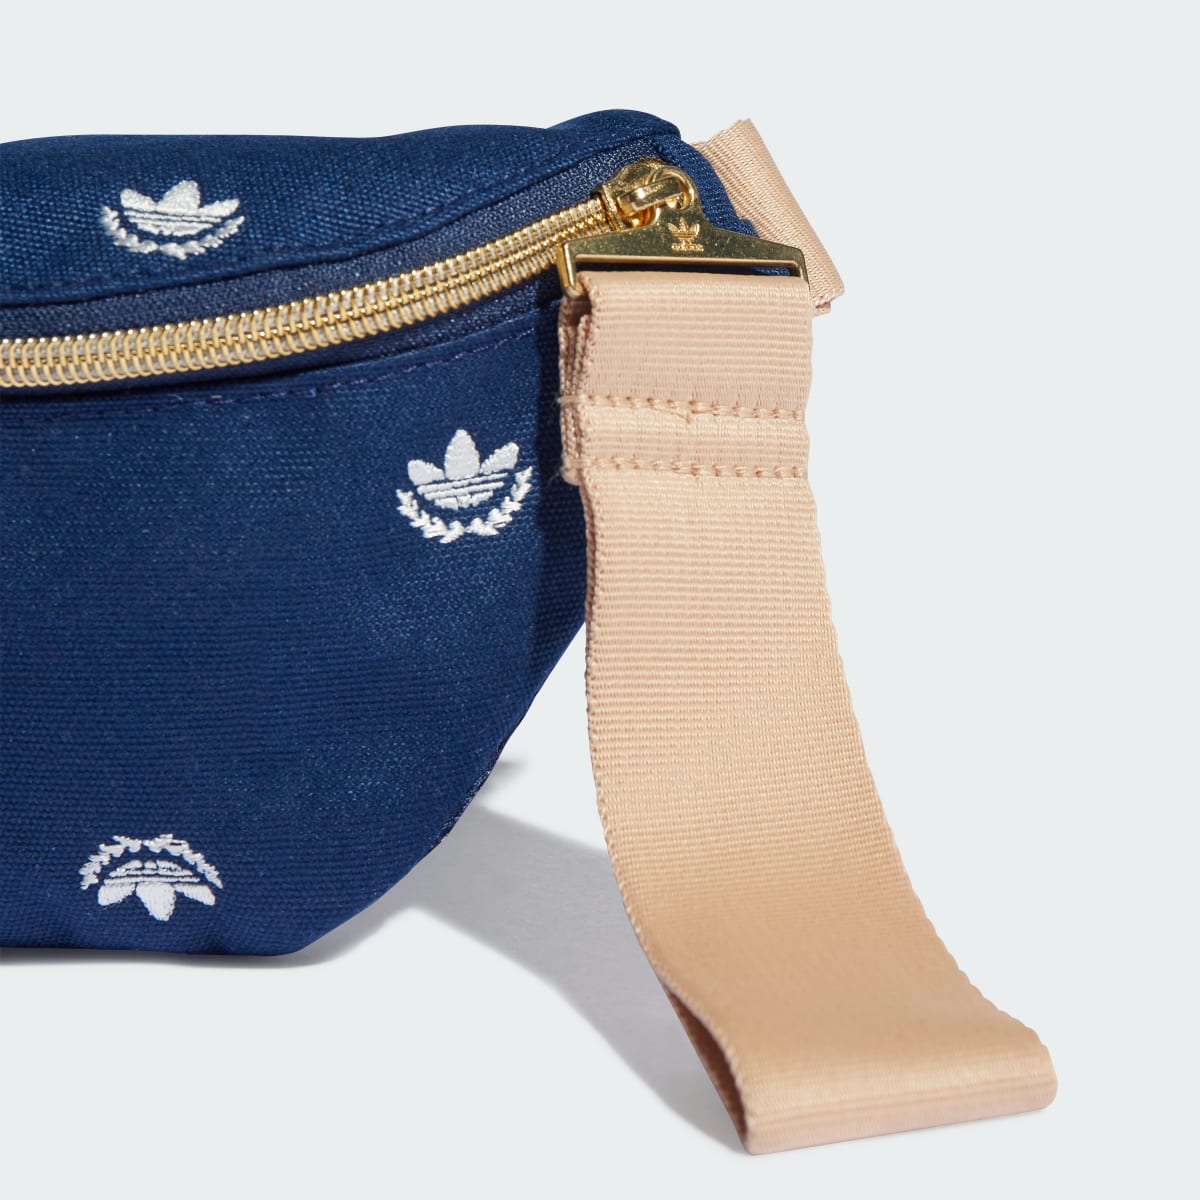 Adidas Trefoil Crest Waist Bag. 6